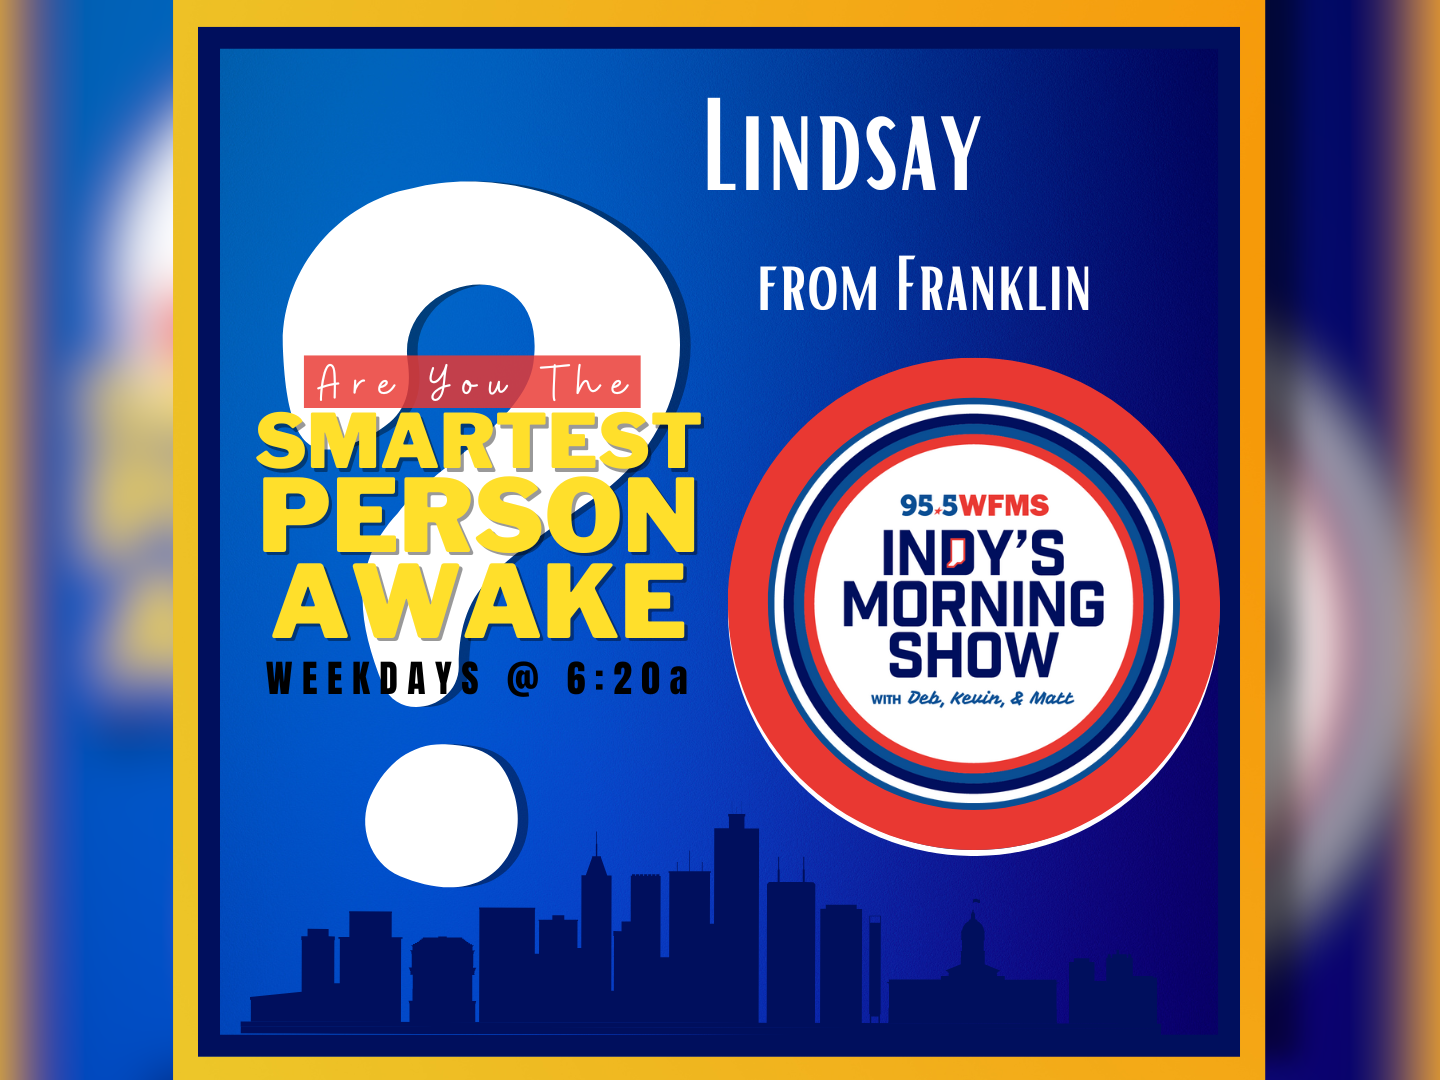 Smartest Person Awake - Lindsay from Franklin